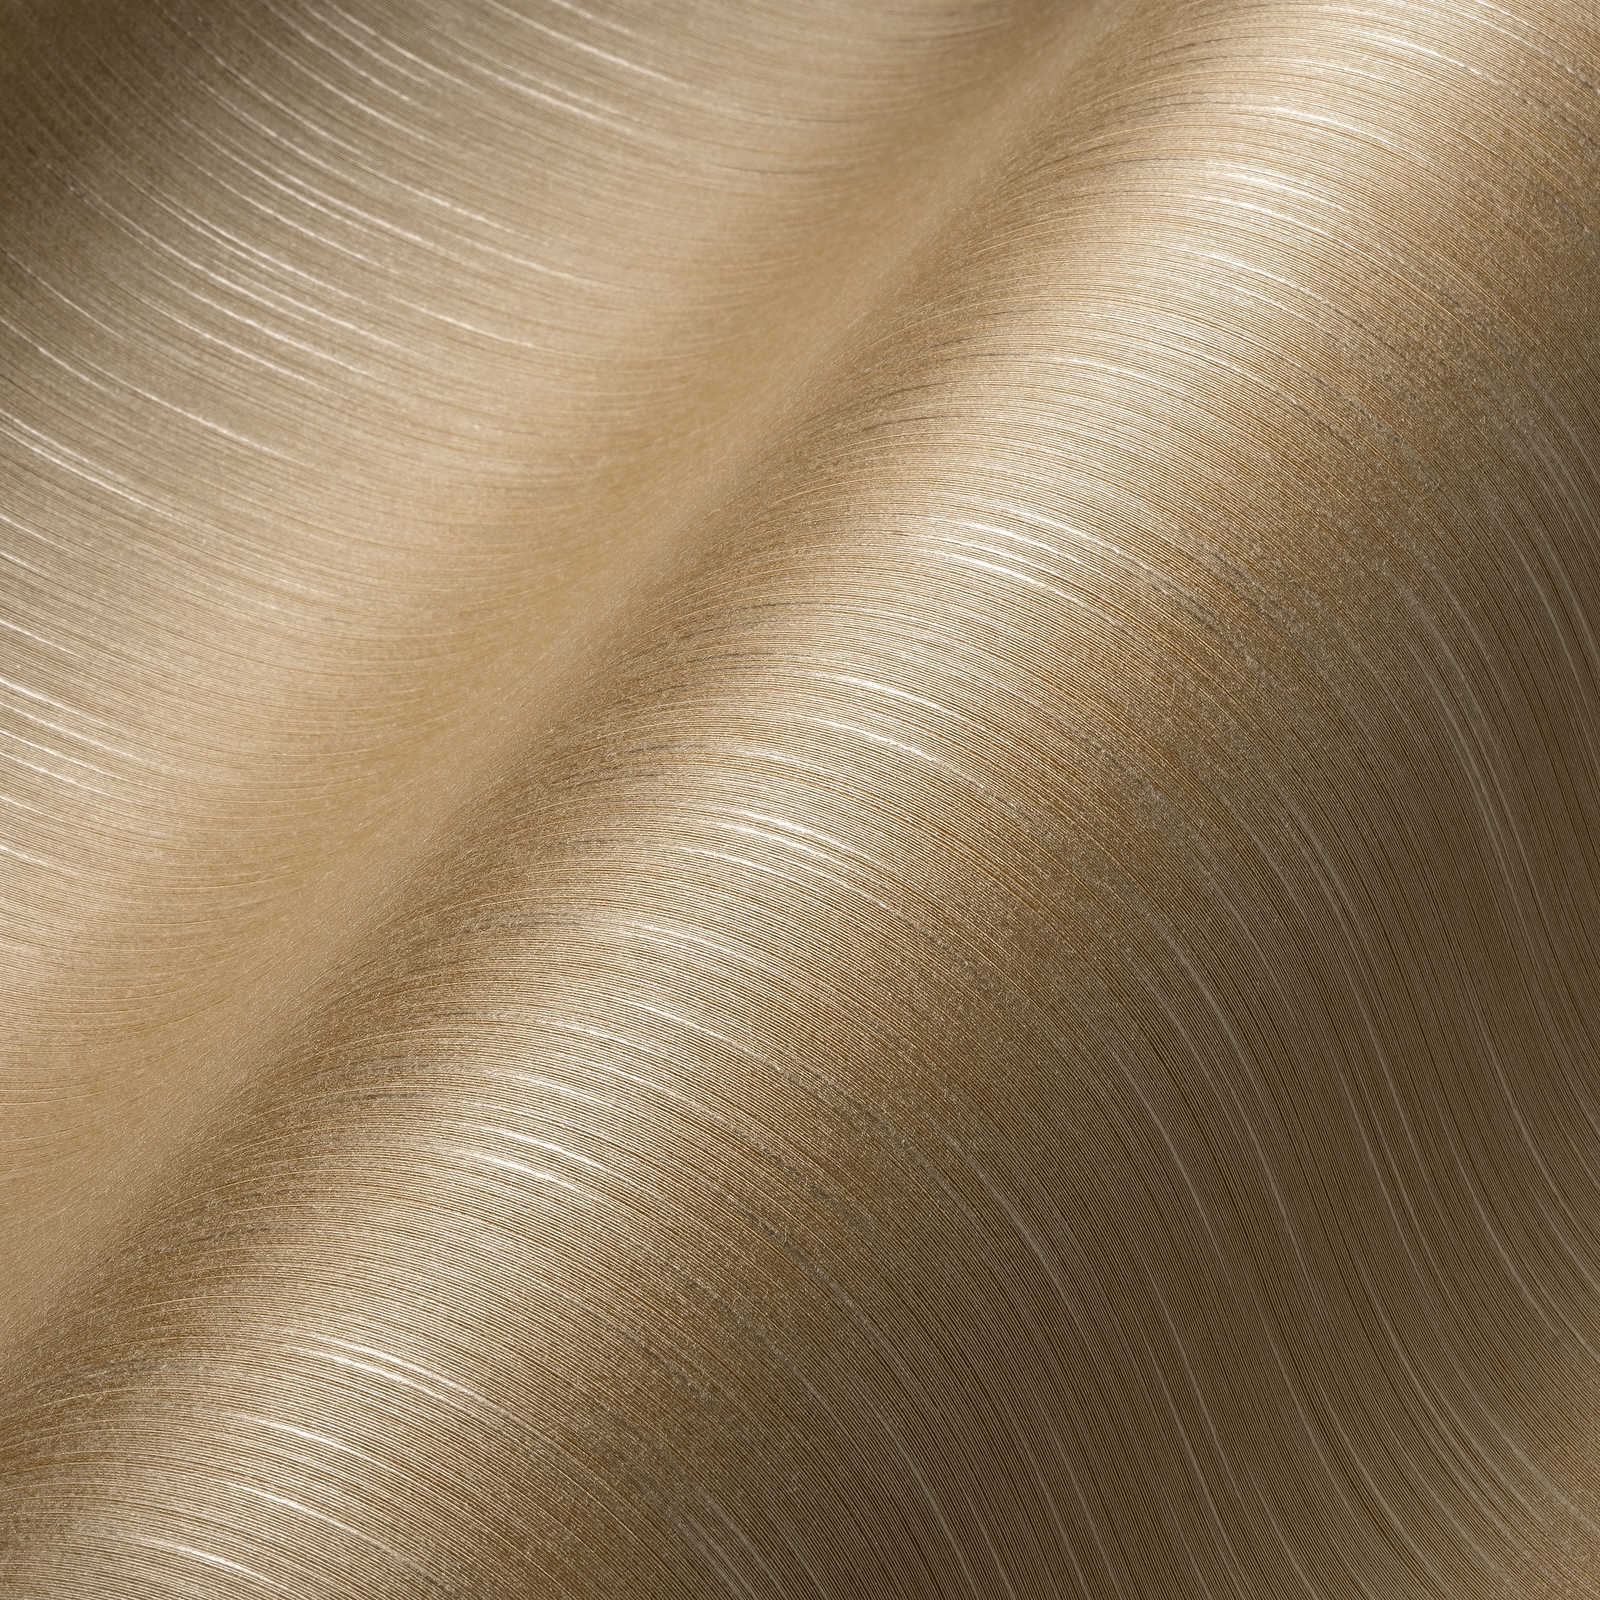             Sand optics wallpaper beige mottled with textile texture
        